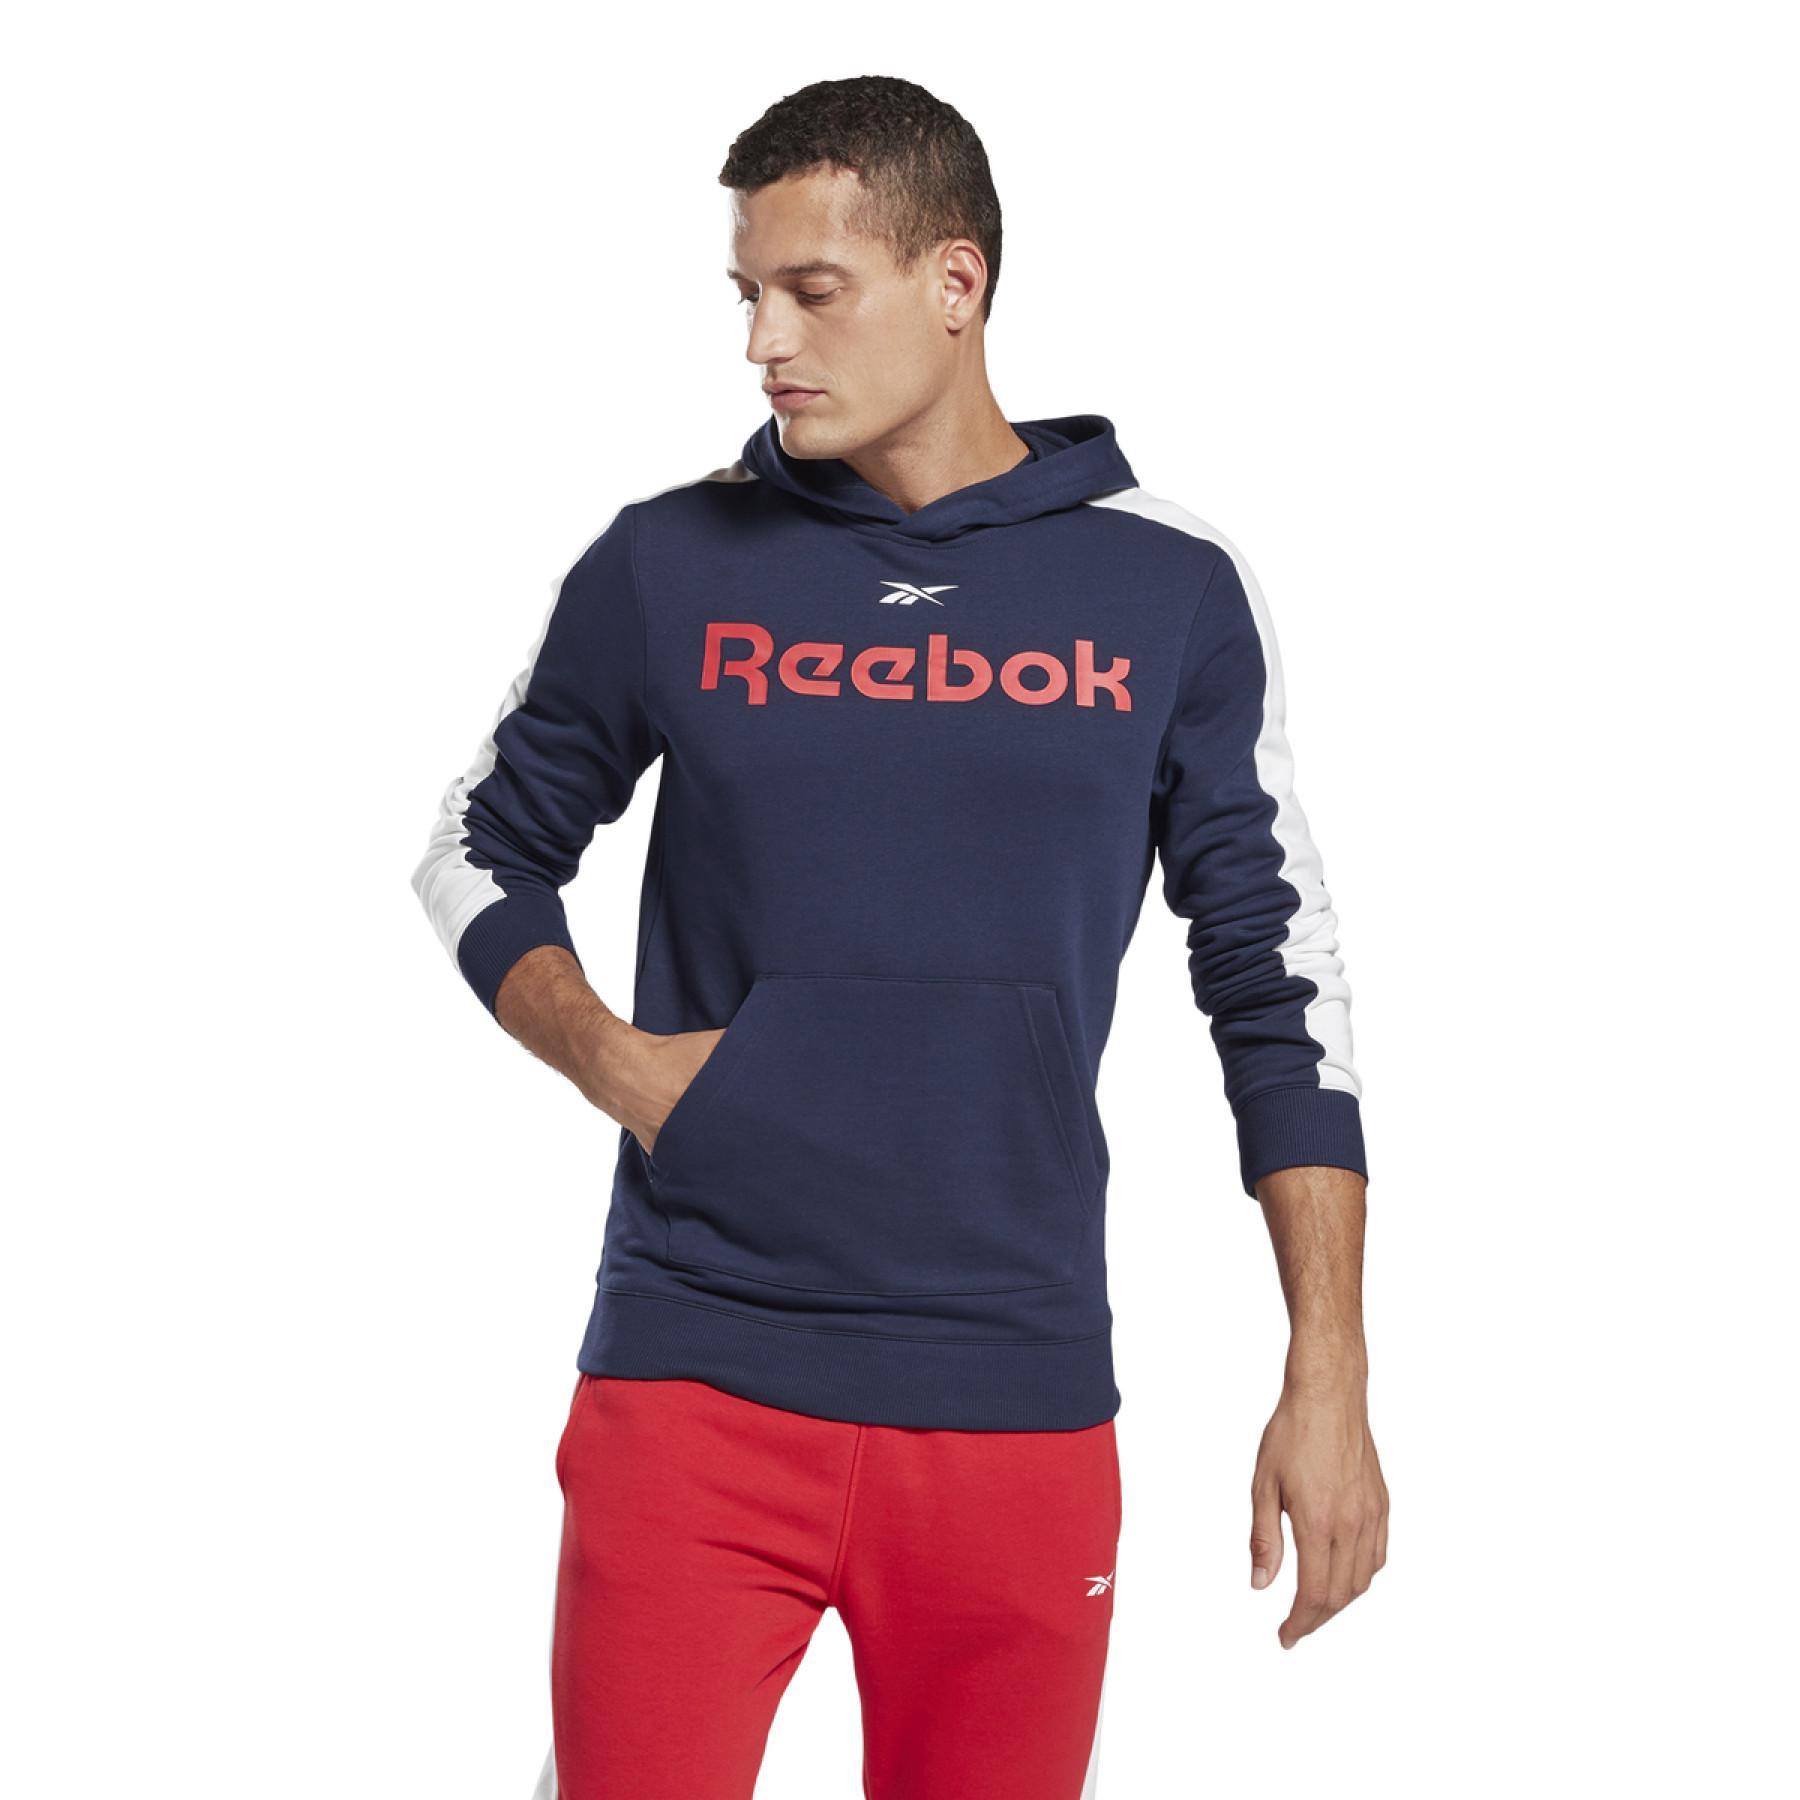 Bluza z kapturem Reebok Training Essentials Linear Logo